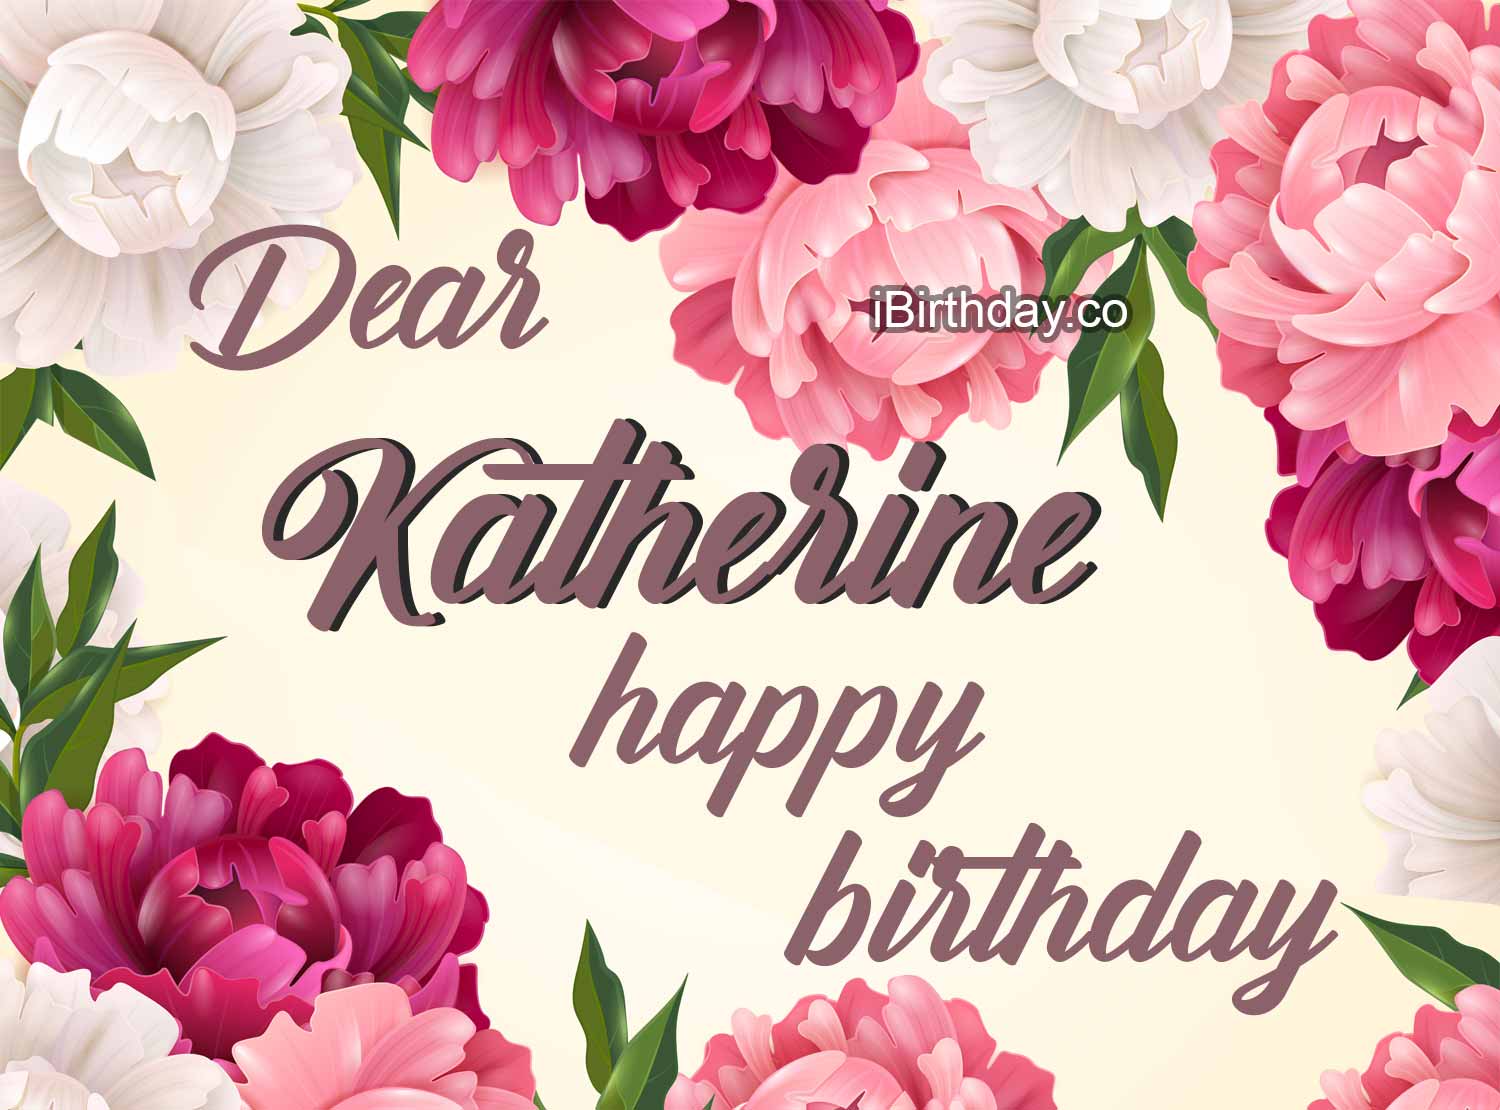 happy-birthday-to-you.net/happy-birthday-katherine-memes-wishes-quotes. hel...